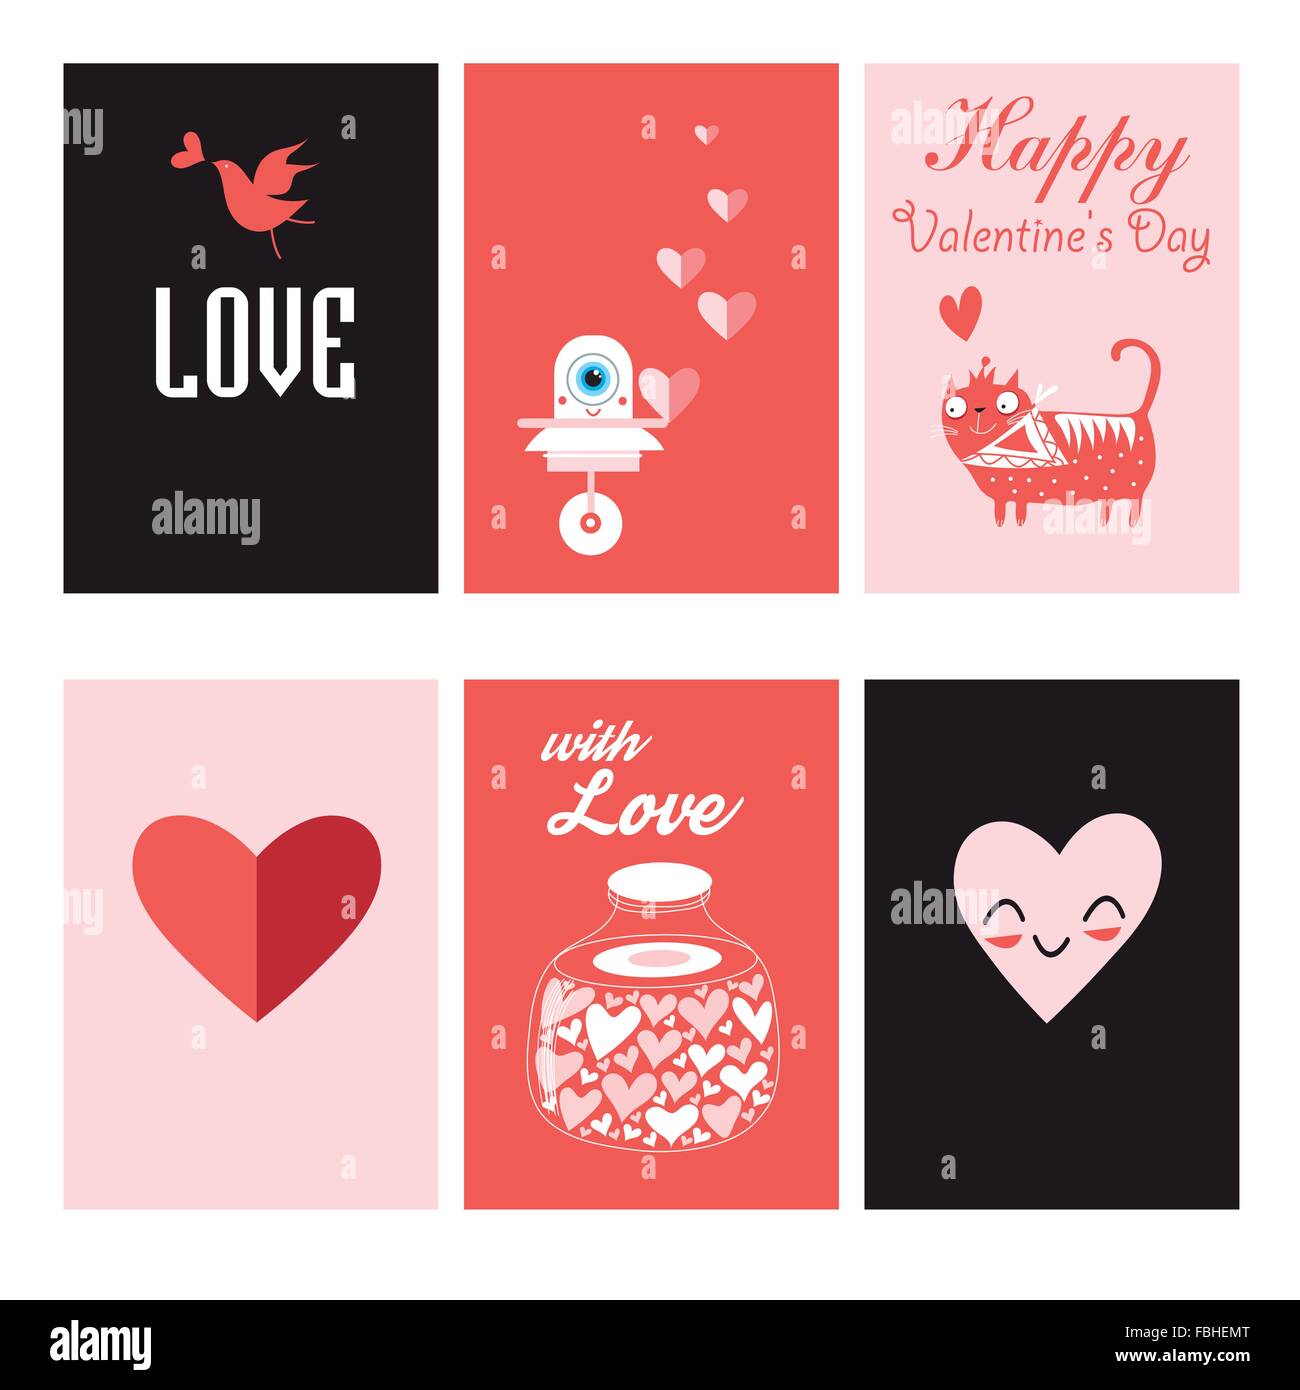 https://c8.alamy.com/compes/fbhemt/el-amor-es-una-coleccion-de-6-tarjetas-perfecto-para-el-dia-de-san-valentin-de-pegatinas-fbhemt.jpg